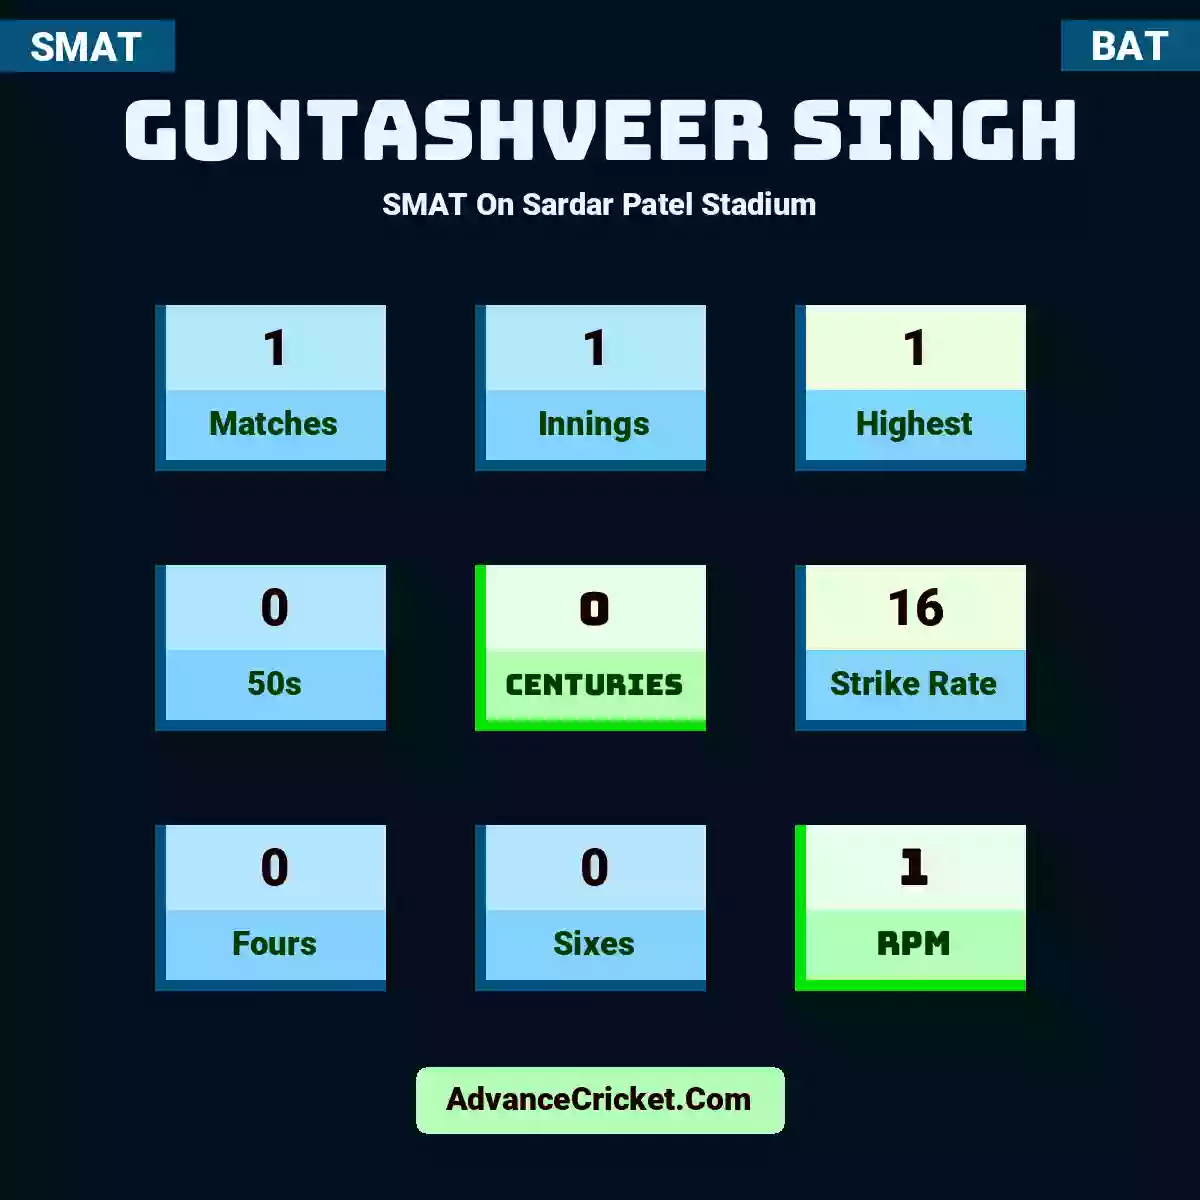 Guntashveer Singh SMAT  On Sardar Patel Stadium, Guntashveer Singh played 1 matches, scored 1 runs as highest, 0 half-centuries, and 0 centuries, with a strike rate of 16. G.Singh hit 0 fours and 0 sixes, with an RPM of 1.